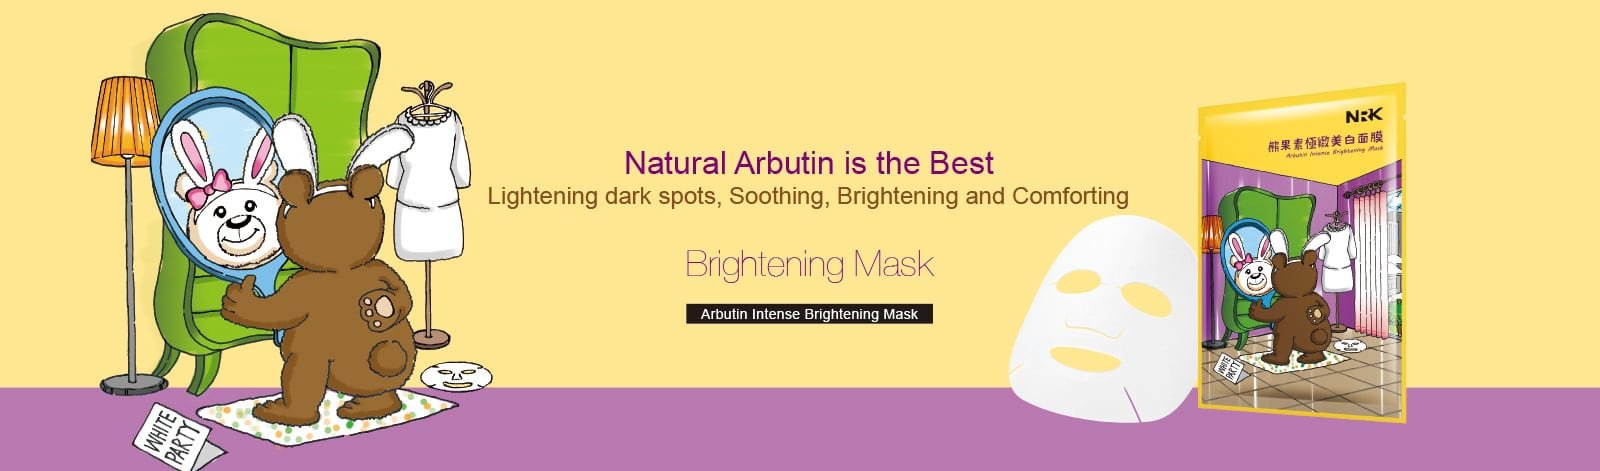 Arbutin Intense Brightening Mask - Introduction